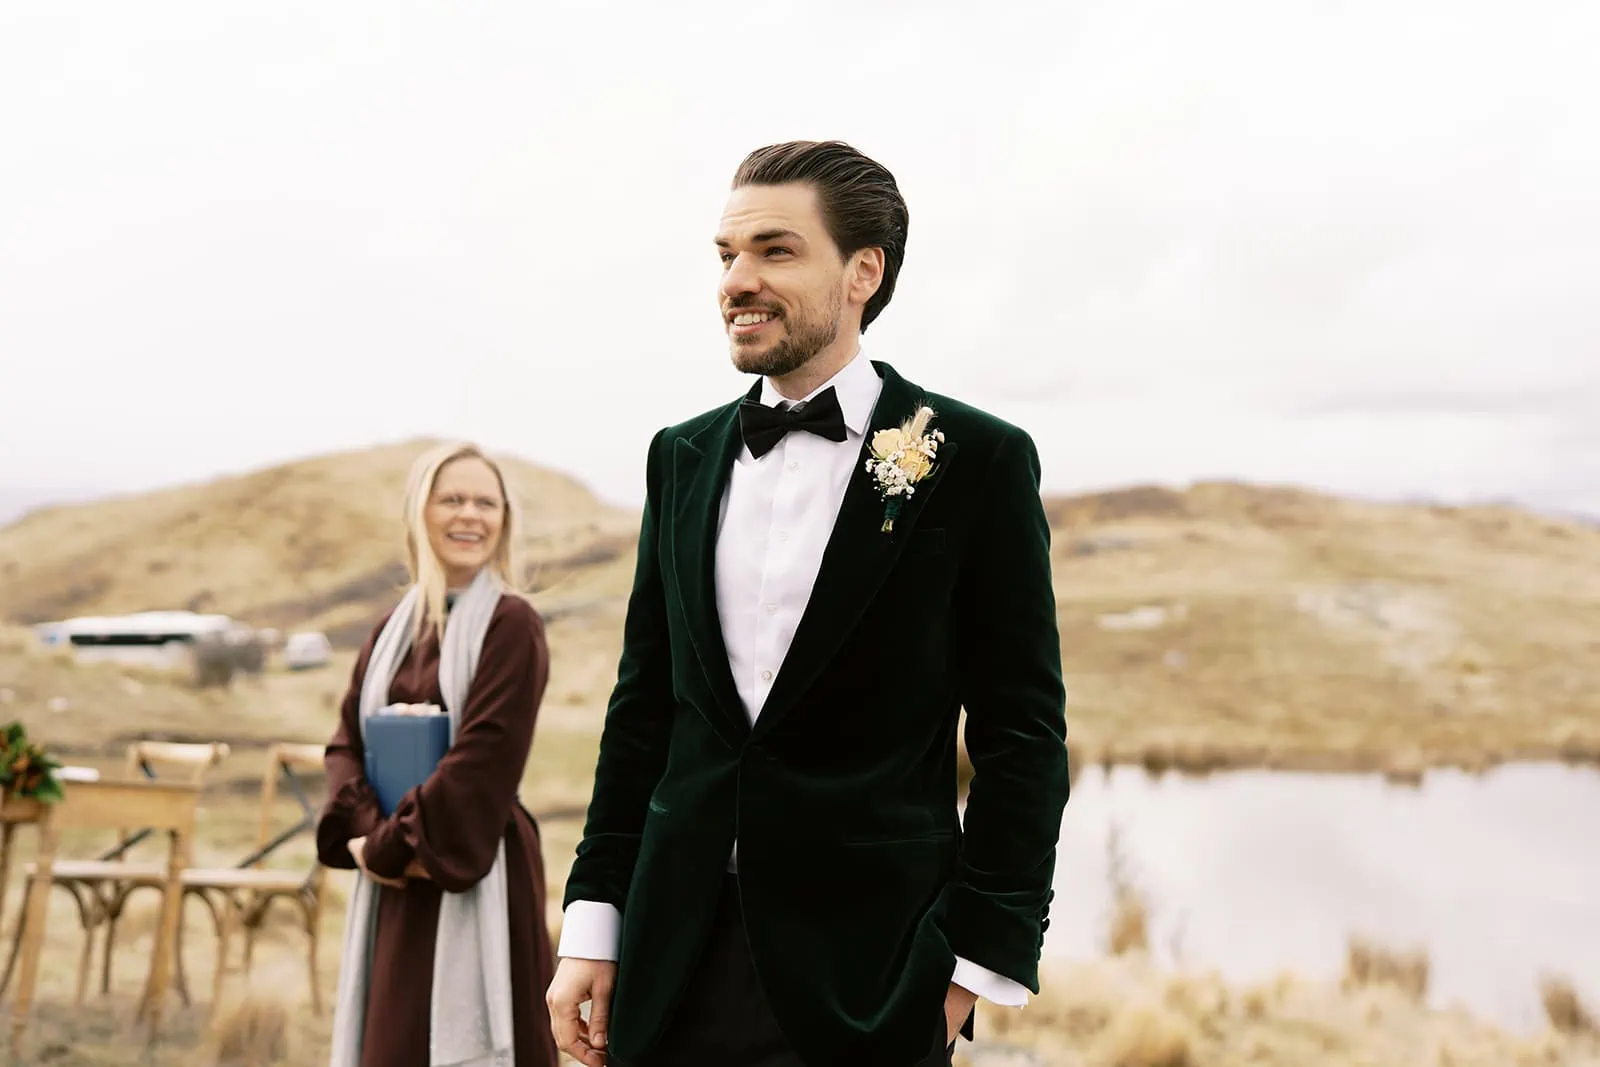 Queenstown Wedding Photographer Nat & Tim's Queenstown Elopement Wedding at Deer Park Heights, featuring a man in a green tuxedo and a woman in a green dress.